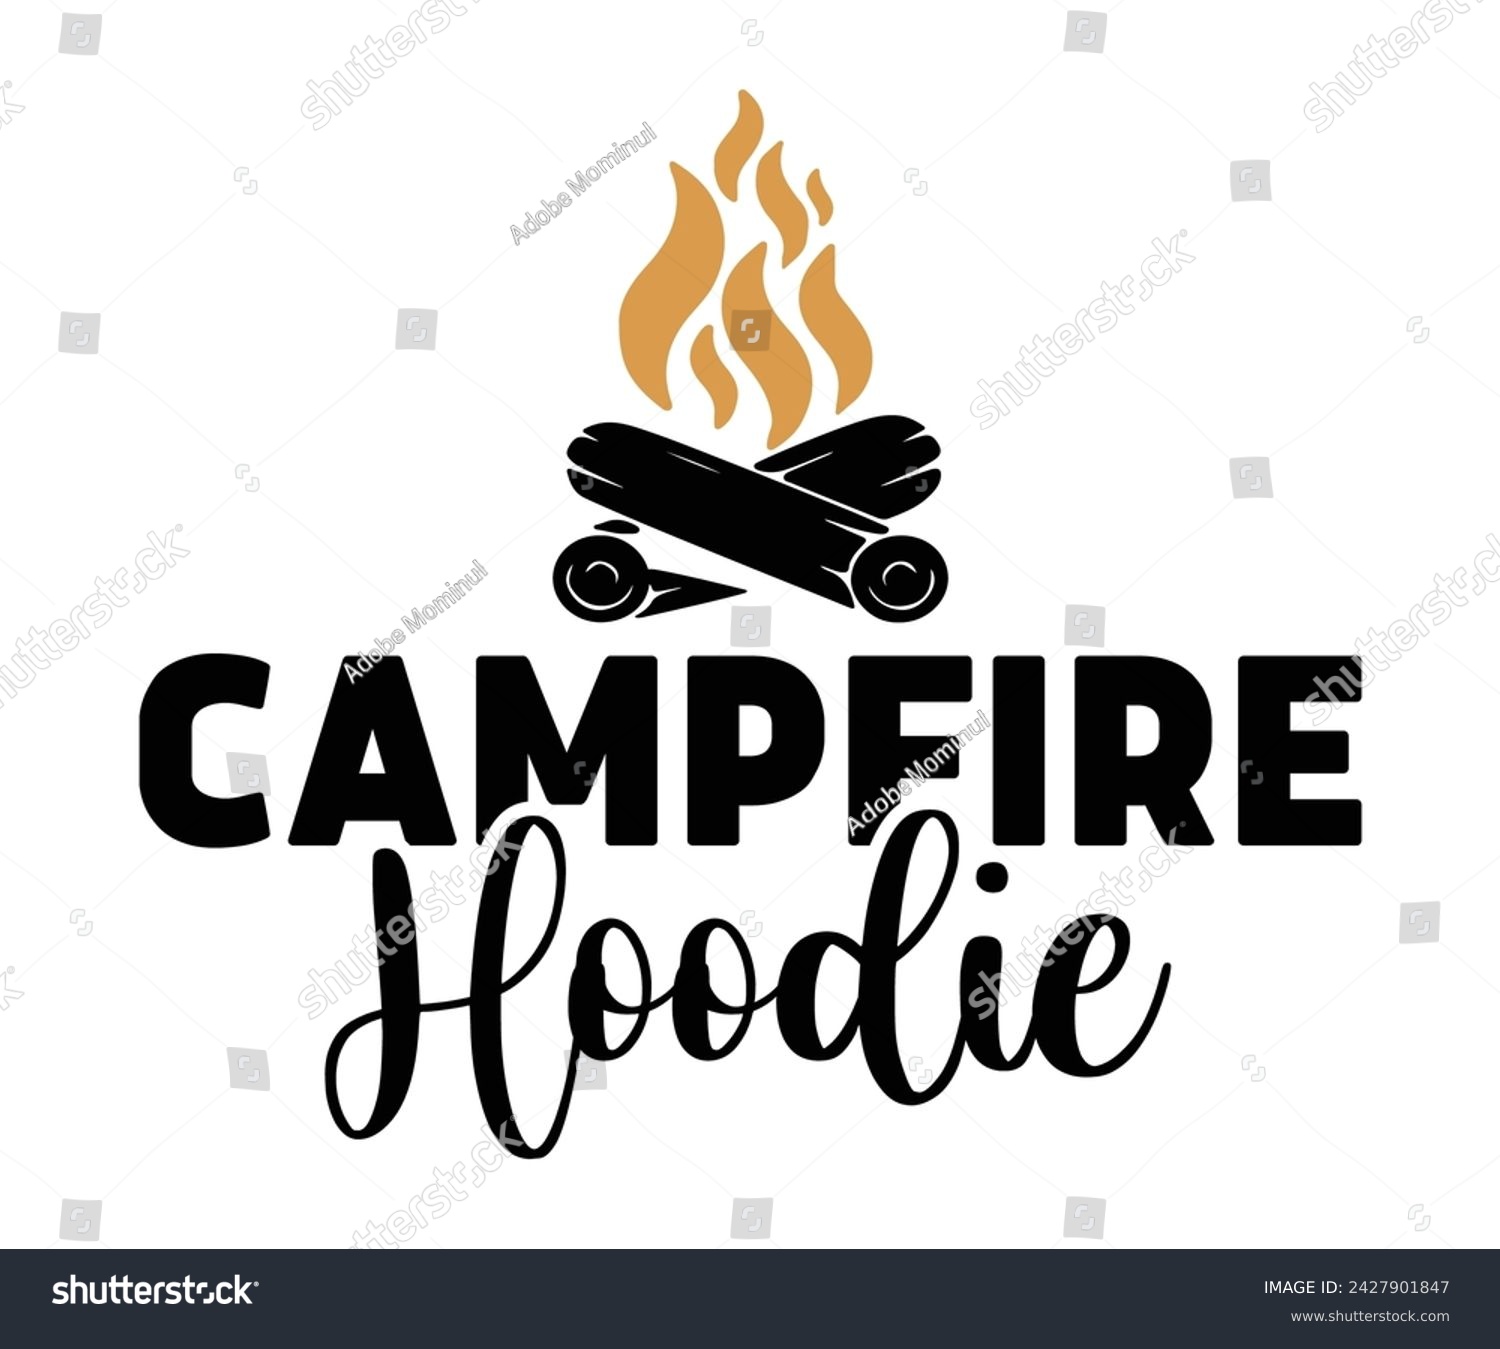 SVG of Campfire Hoodie Svg,Happy Camper Svg,Camping Svg,Adventure Svg,Hiking Svg,Camp Saying,Camp Life Svg,Svg Cut Files, Png,Mountain T-shirt,Instant Download svg